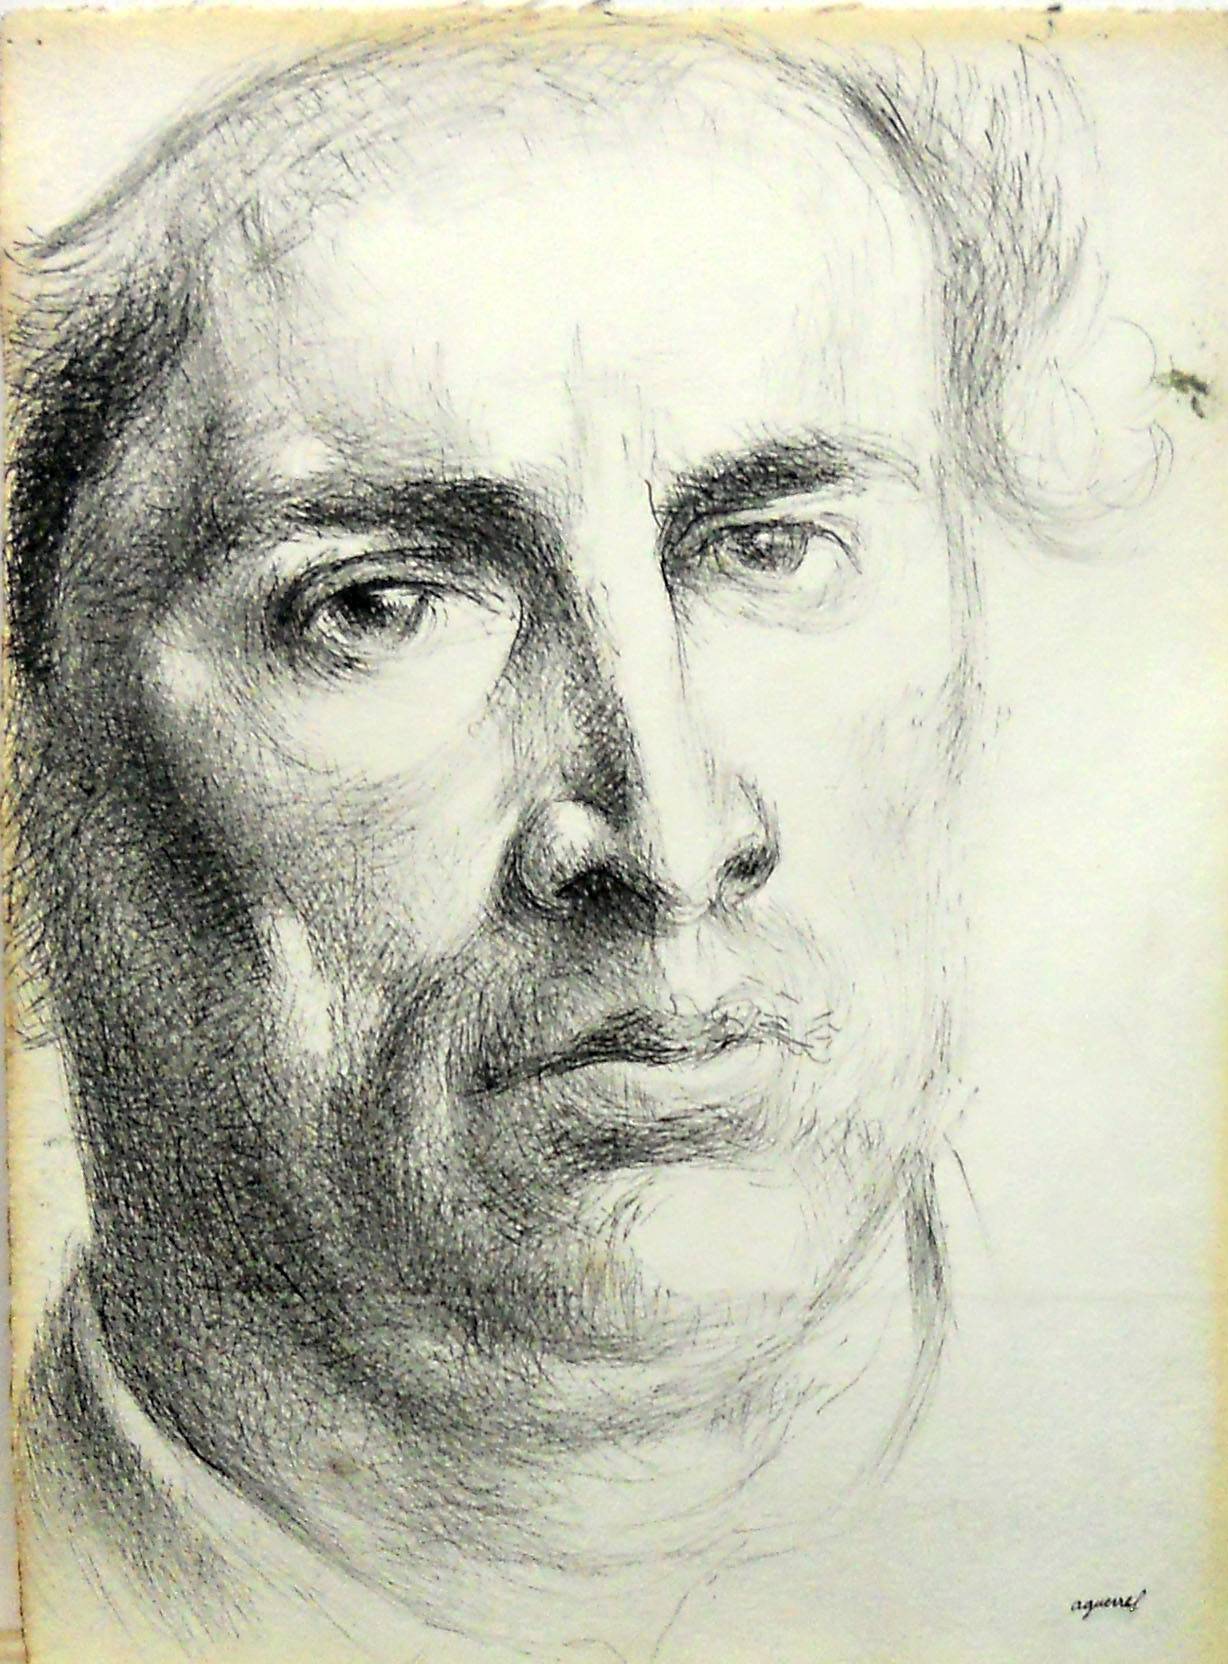 Autorretrato, c.1952. Ricardo L. Aguerre (1897-1967). Tinta china sobre papel.  33 x 24 cm. Nº inv. 2276.